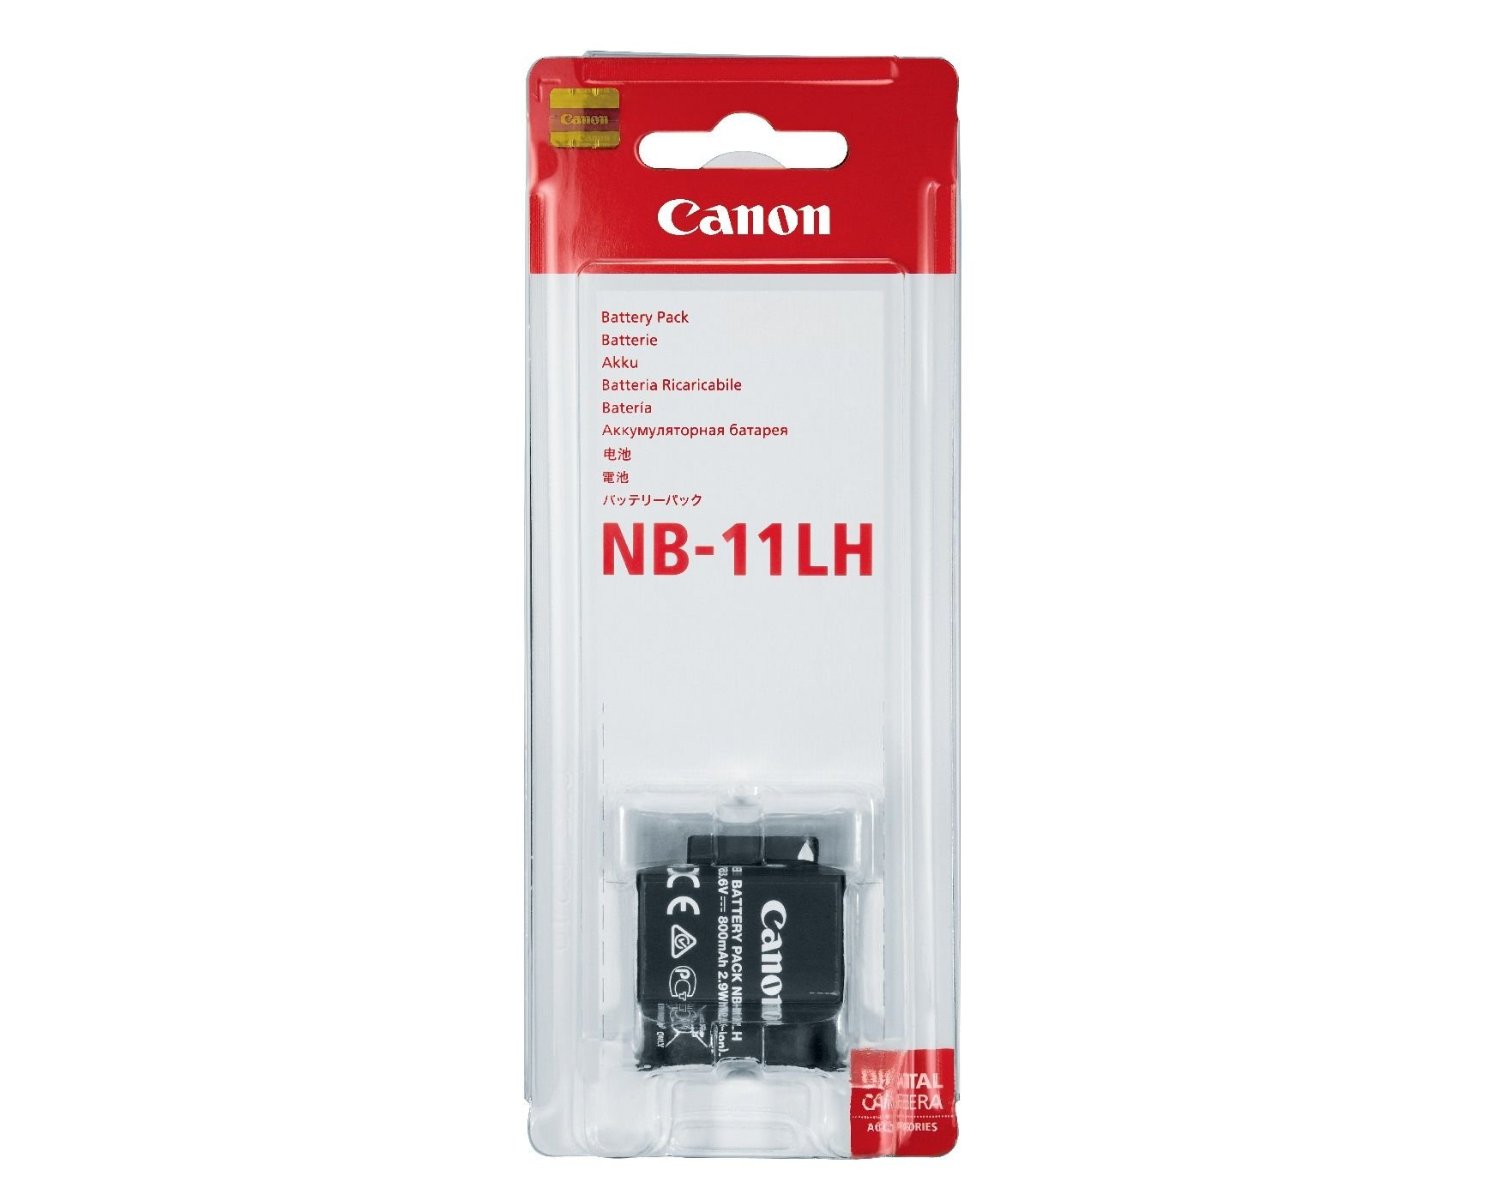 Canon batterie Pack NB-11LH